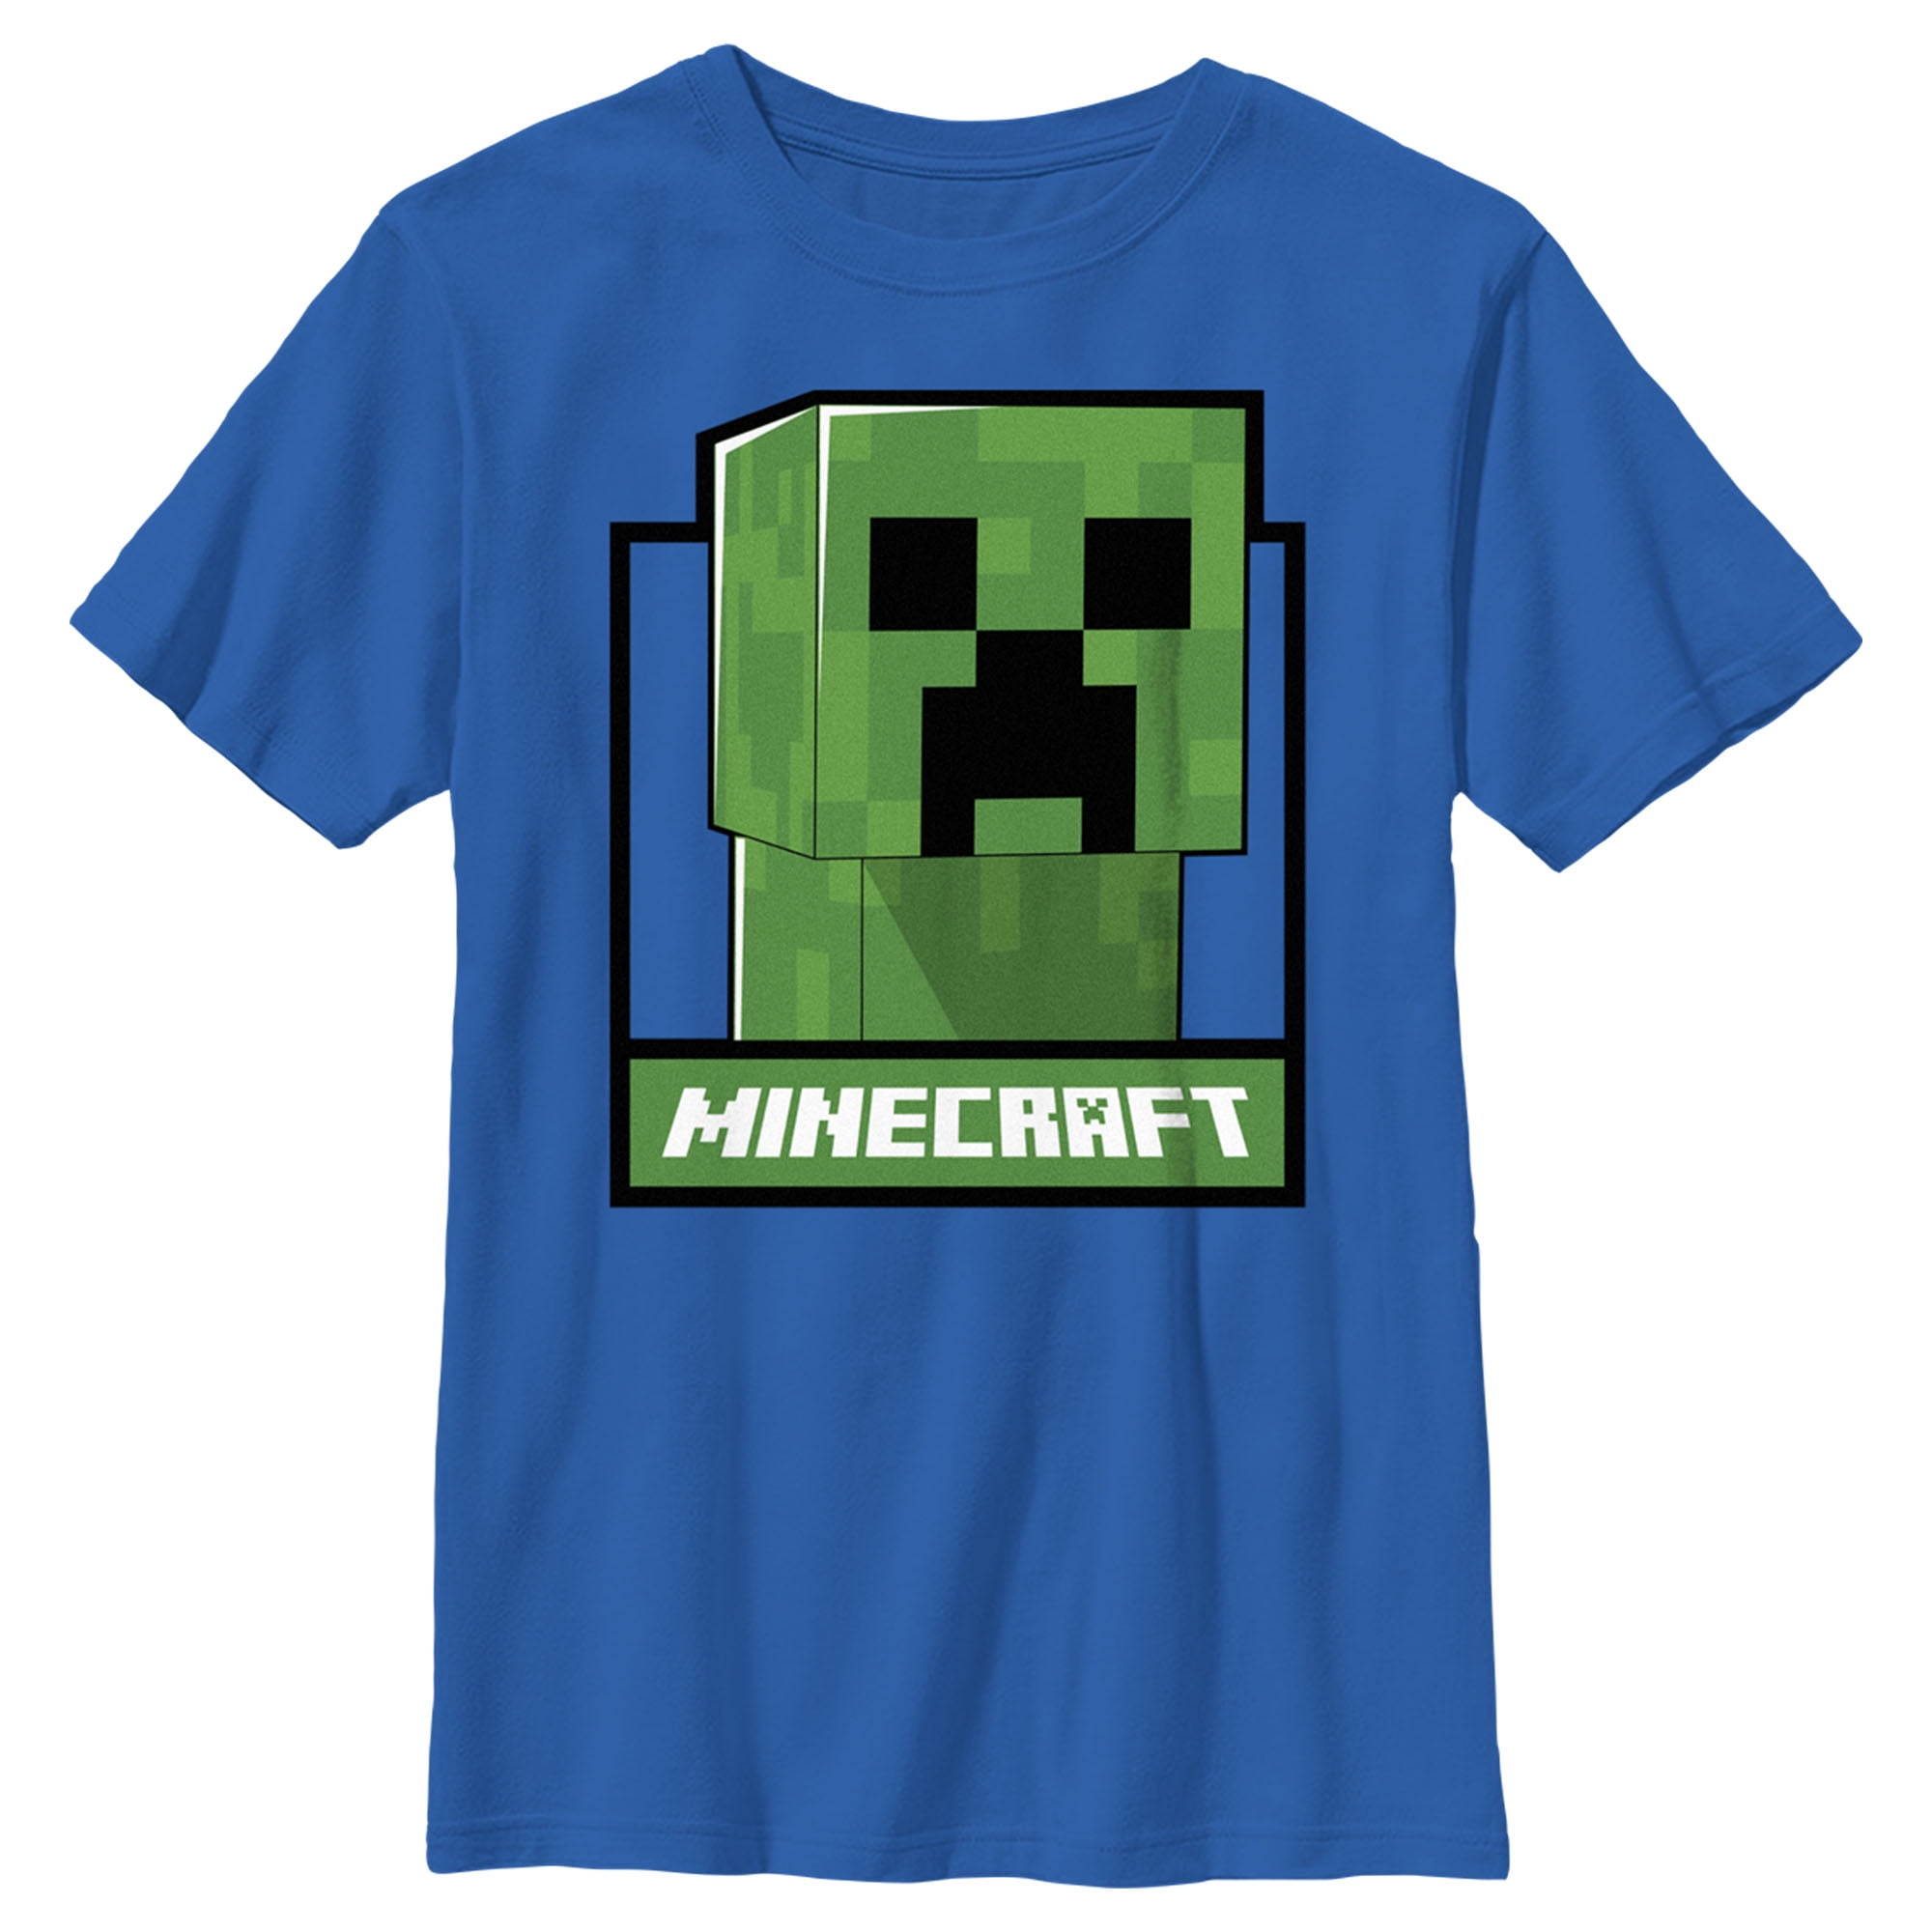 Minecraft Youth Boys Iron Golem Blue Tee Shirt New M L 